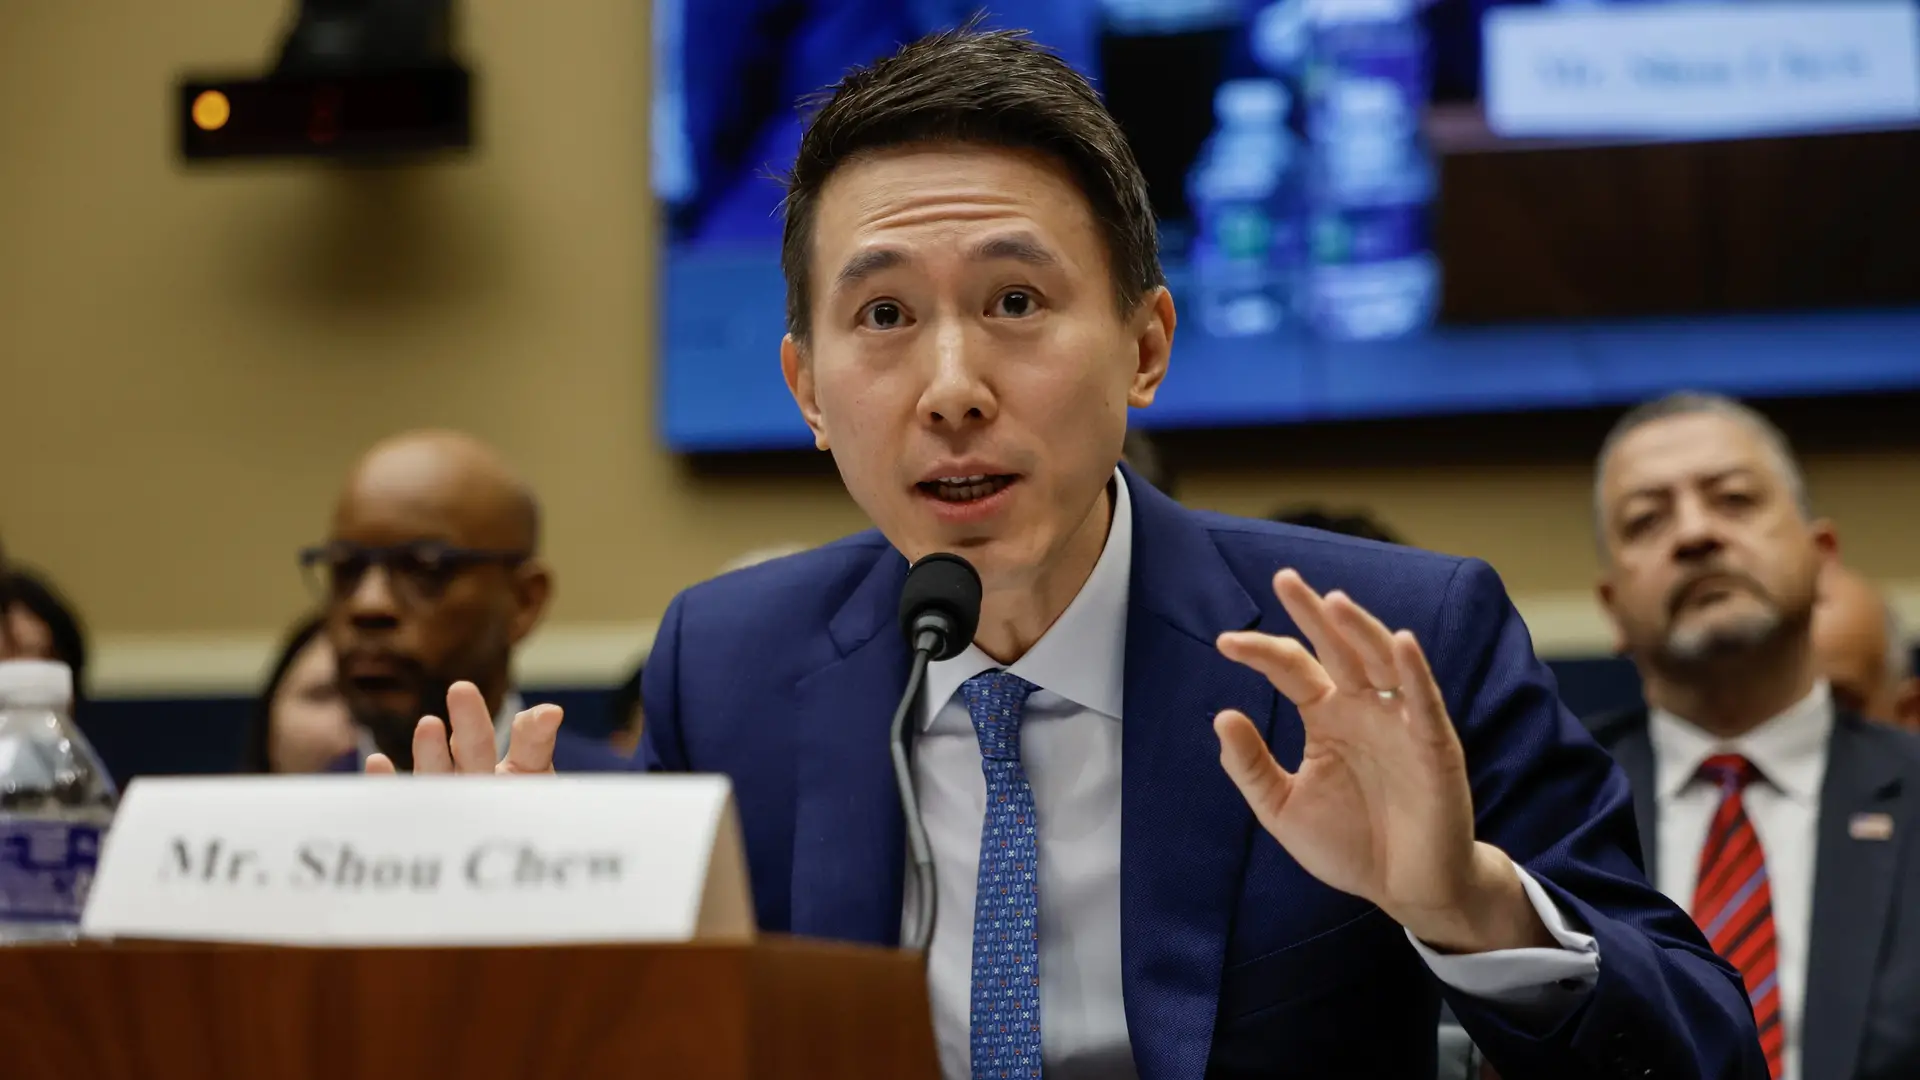 TikTok CEO'su Shou Zi Chew, ABD Kongresi'nde ifade verdi